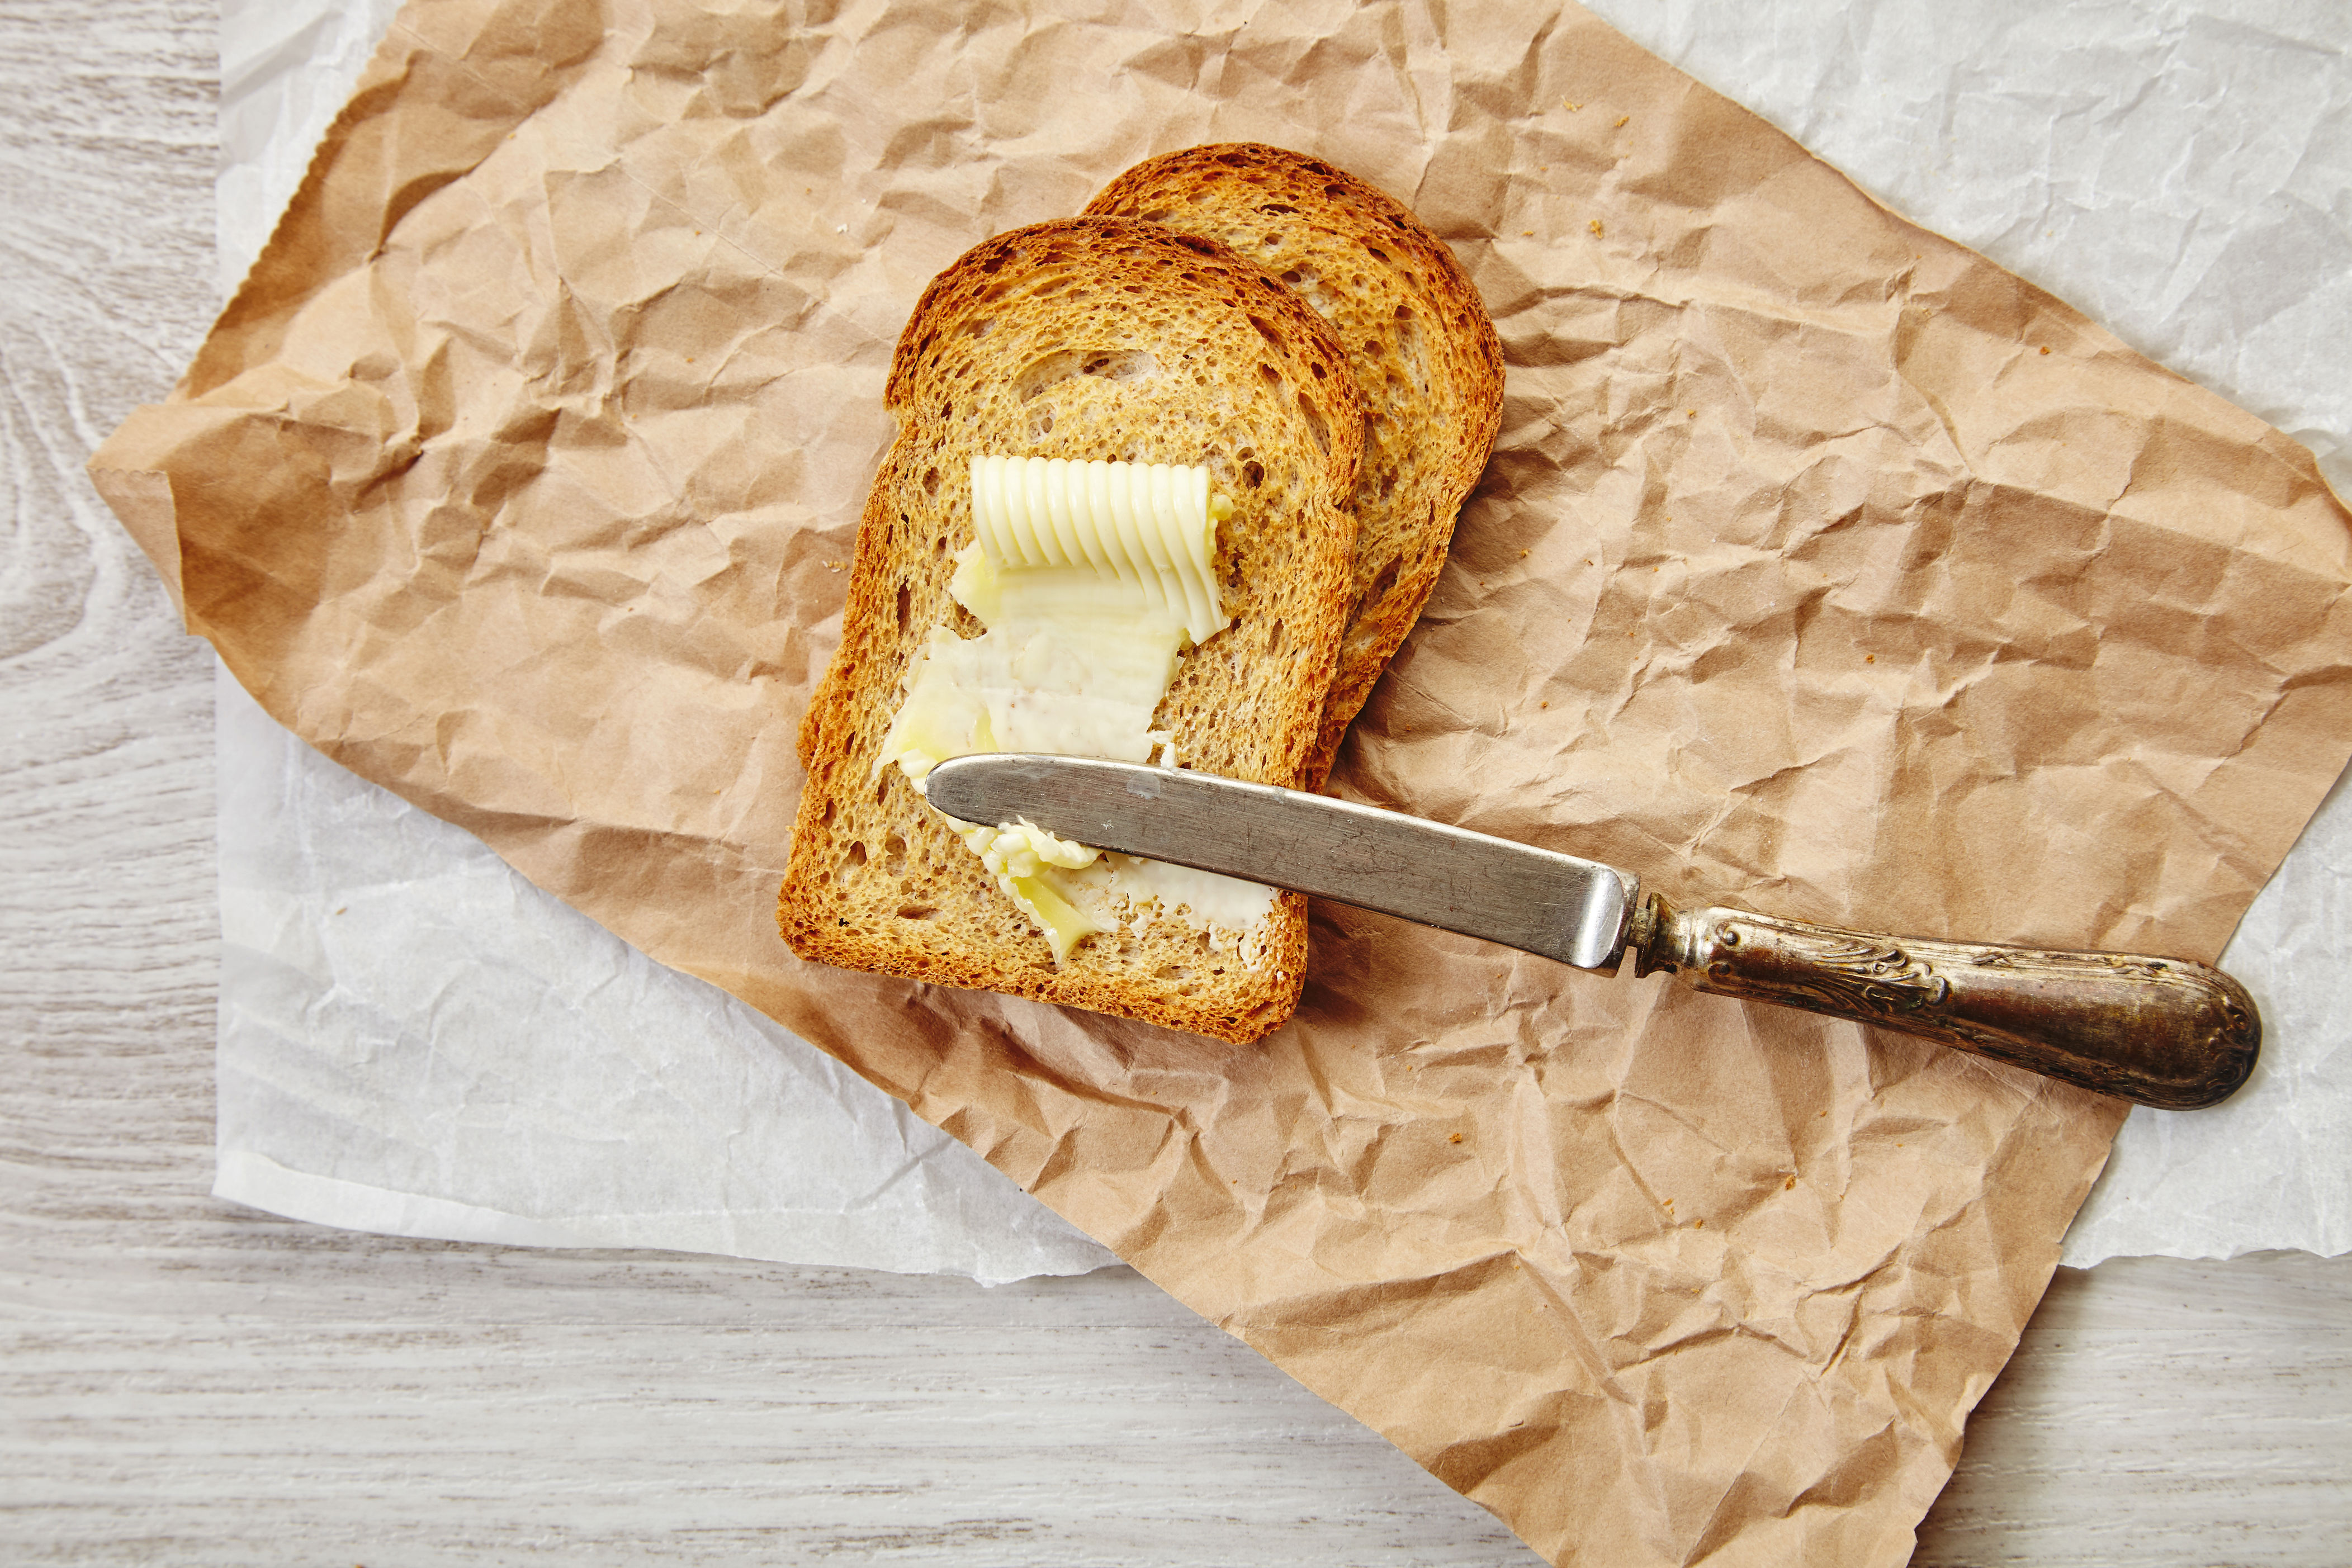 Сливочное масло на завтрак. Хлеб с маслом. Сливочное масло на хлебе. Бутерброд с маслом. Бутерброды с маслом на завтрак.